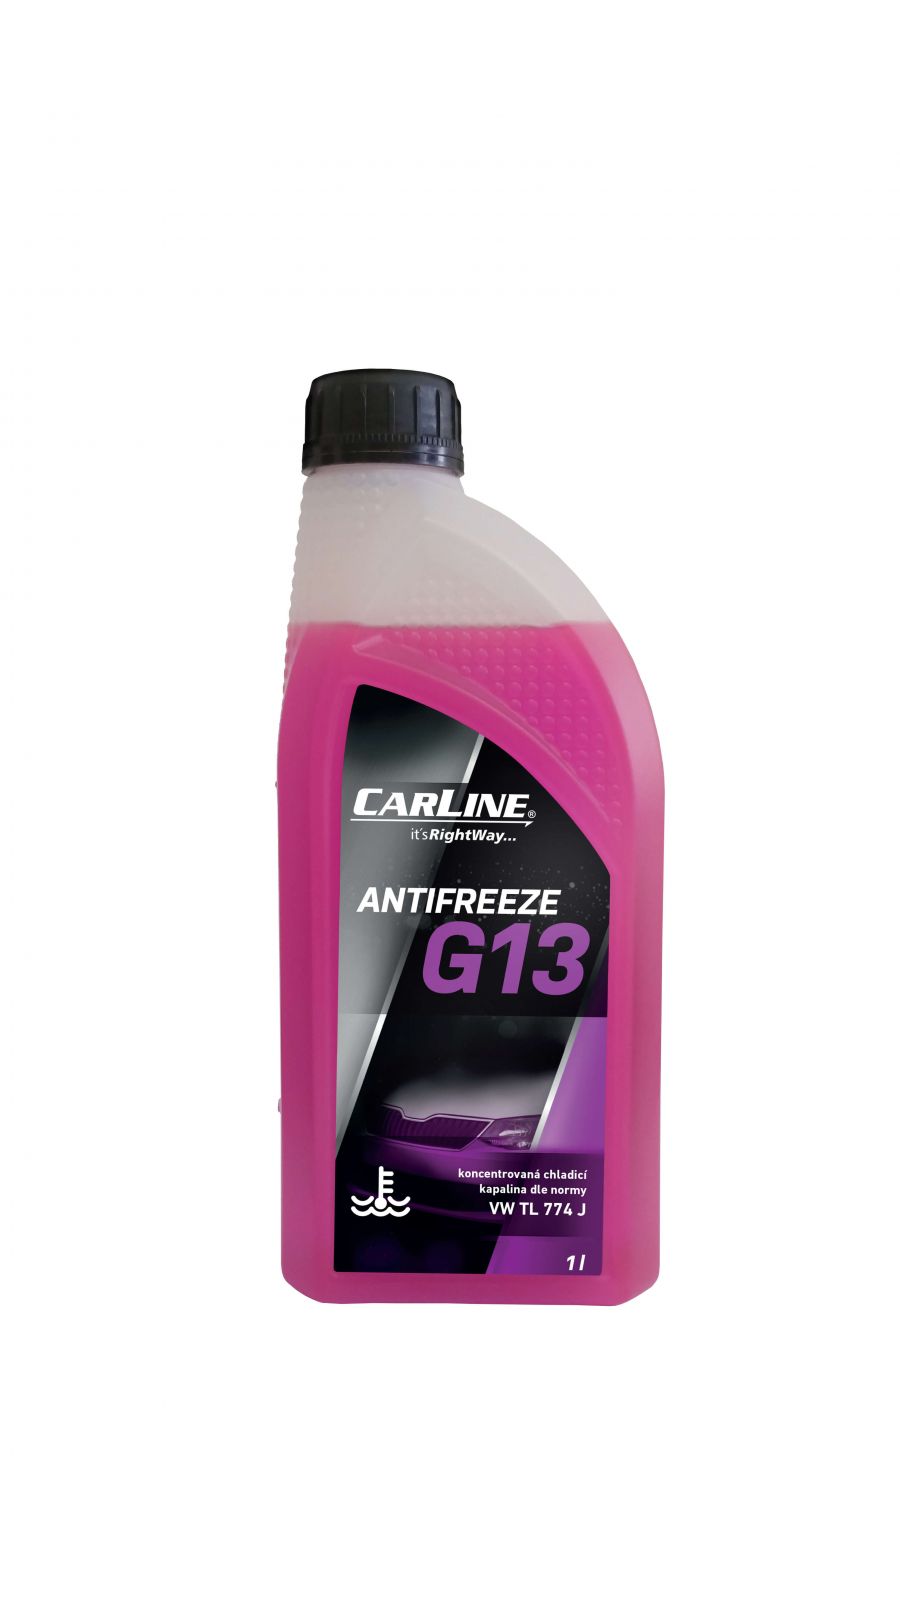 Carline Antifreeze G13 - 4 L